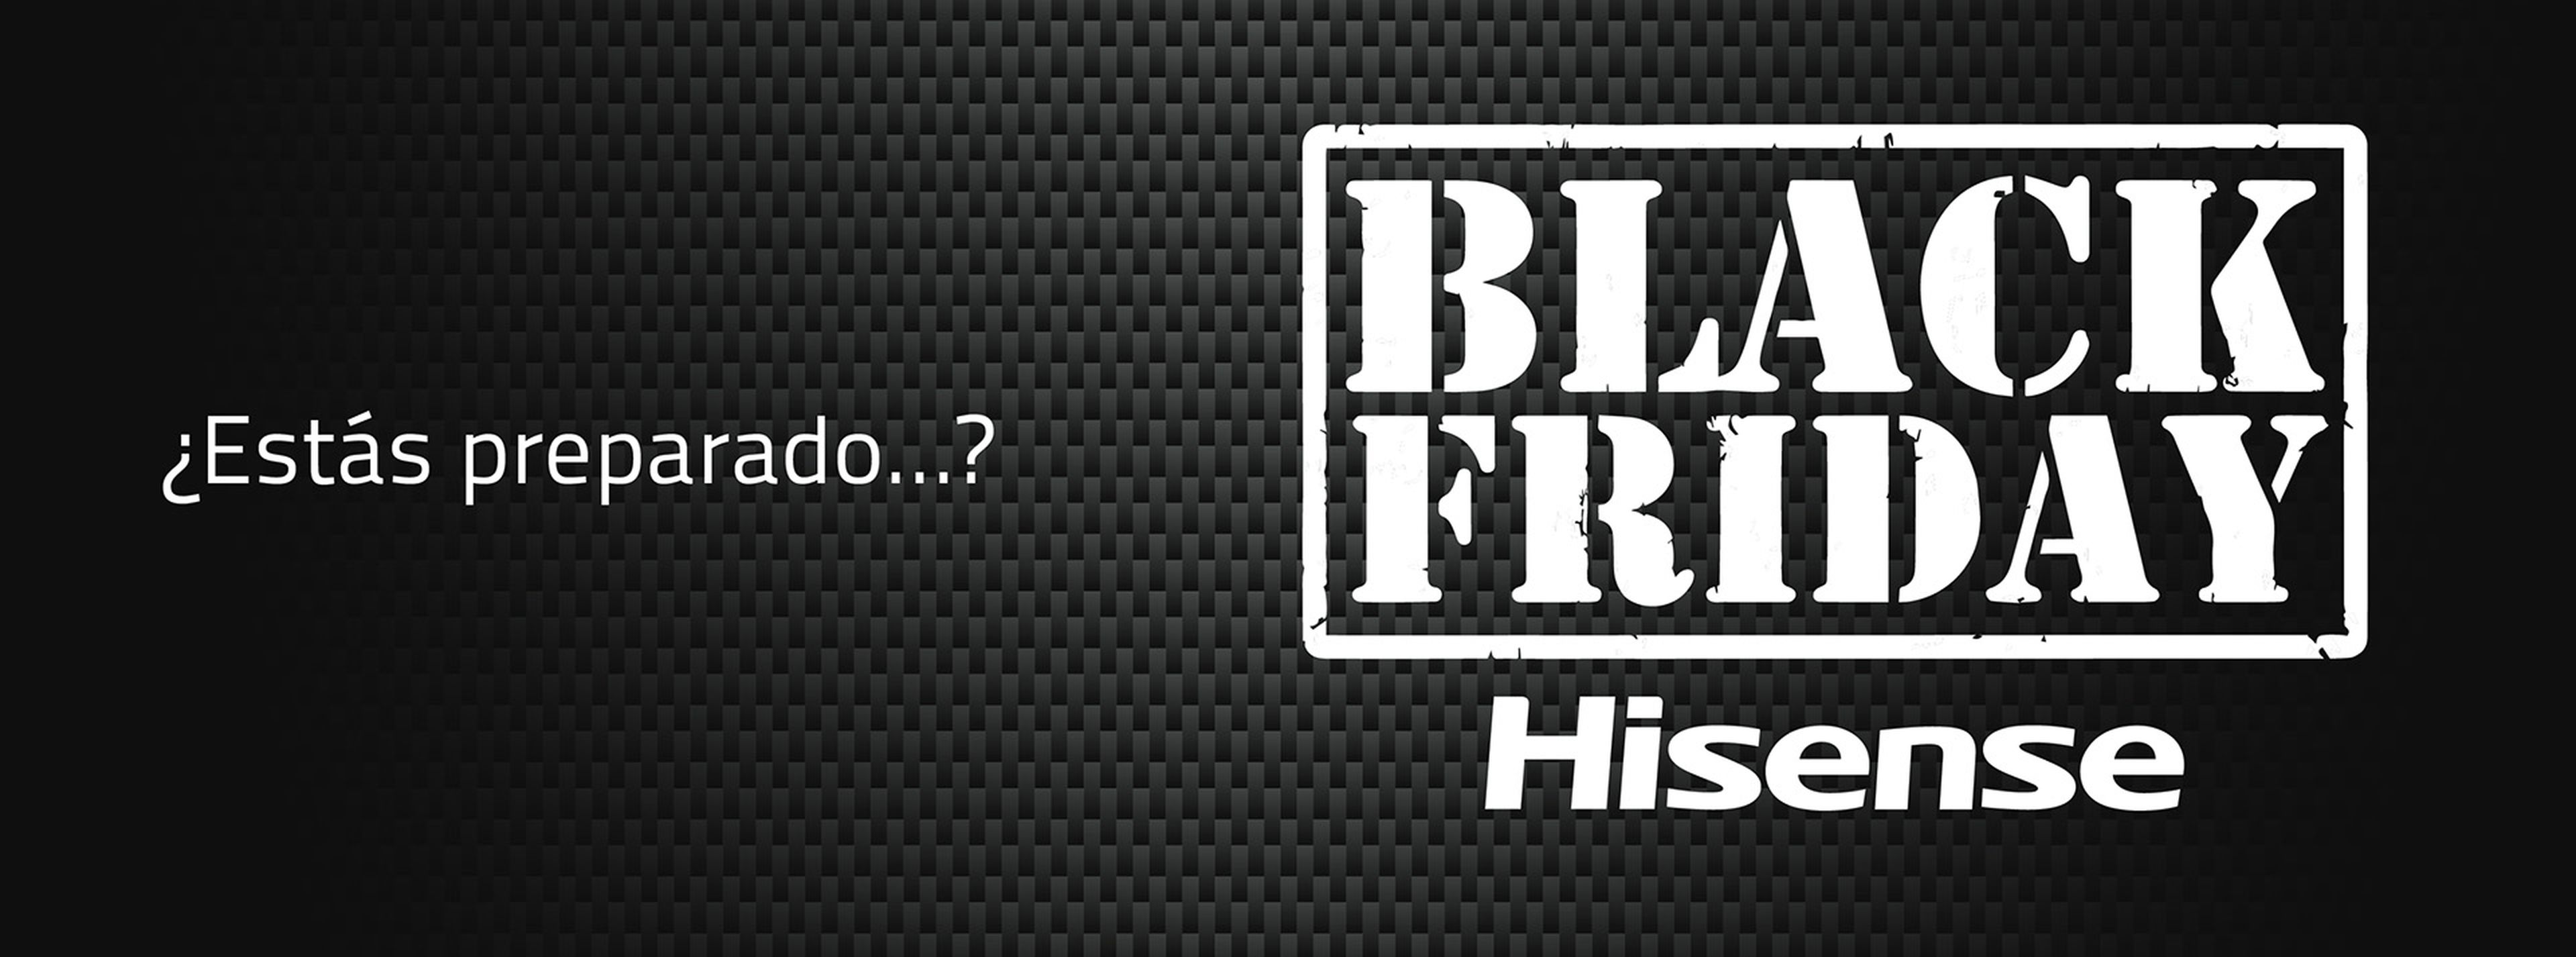 Black Friday 2016 Hisense